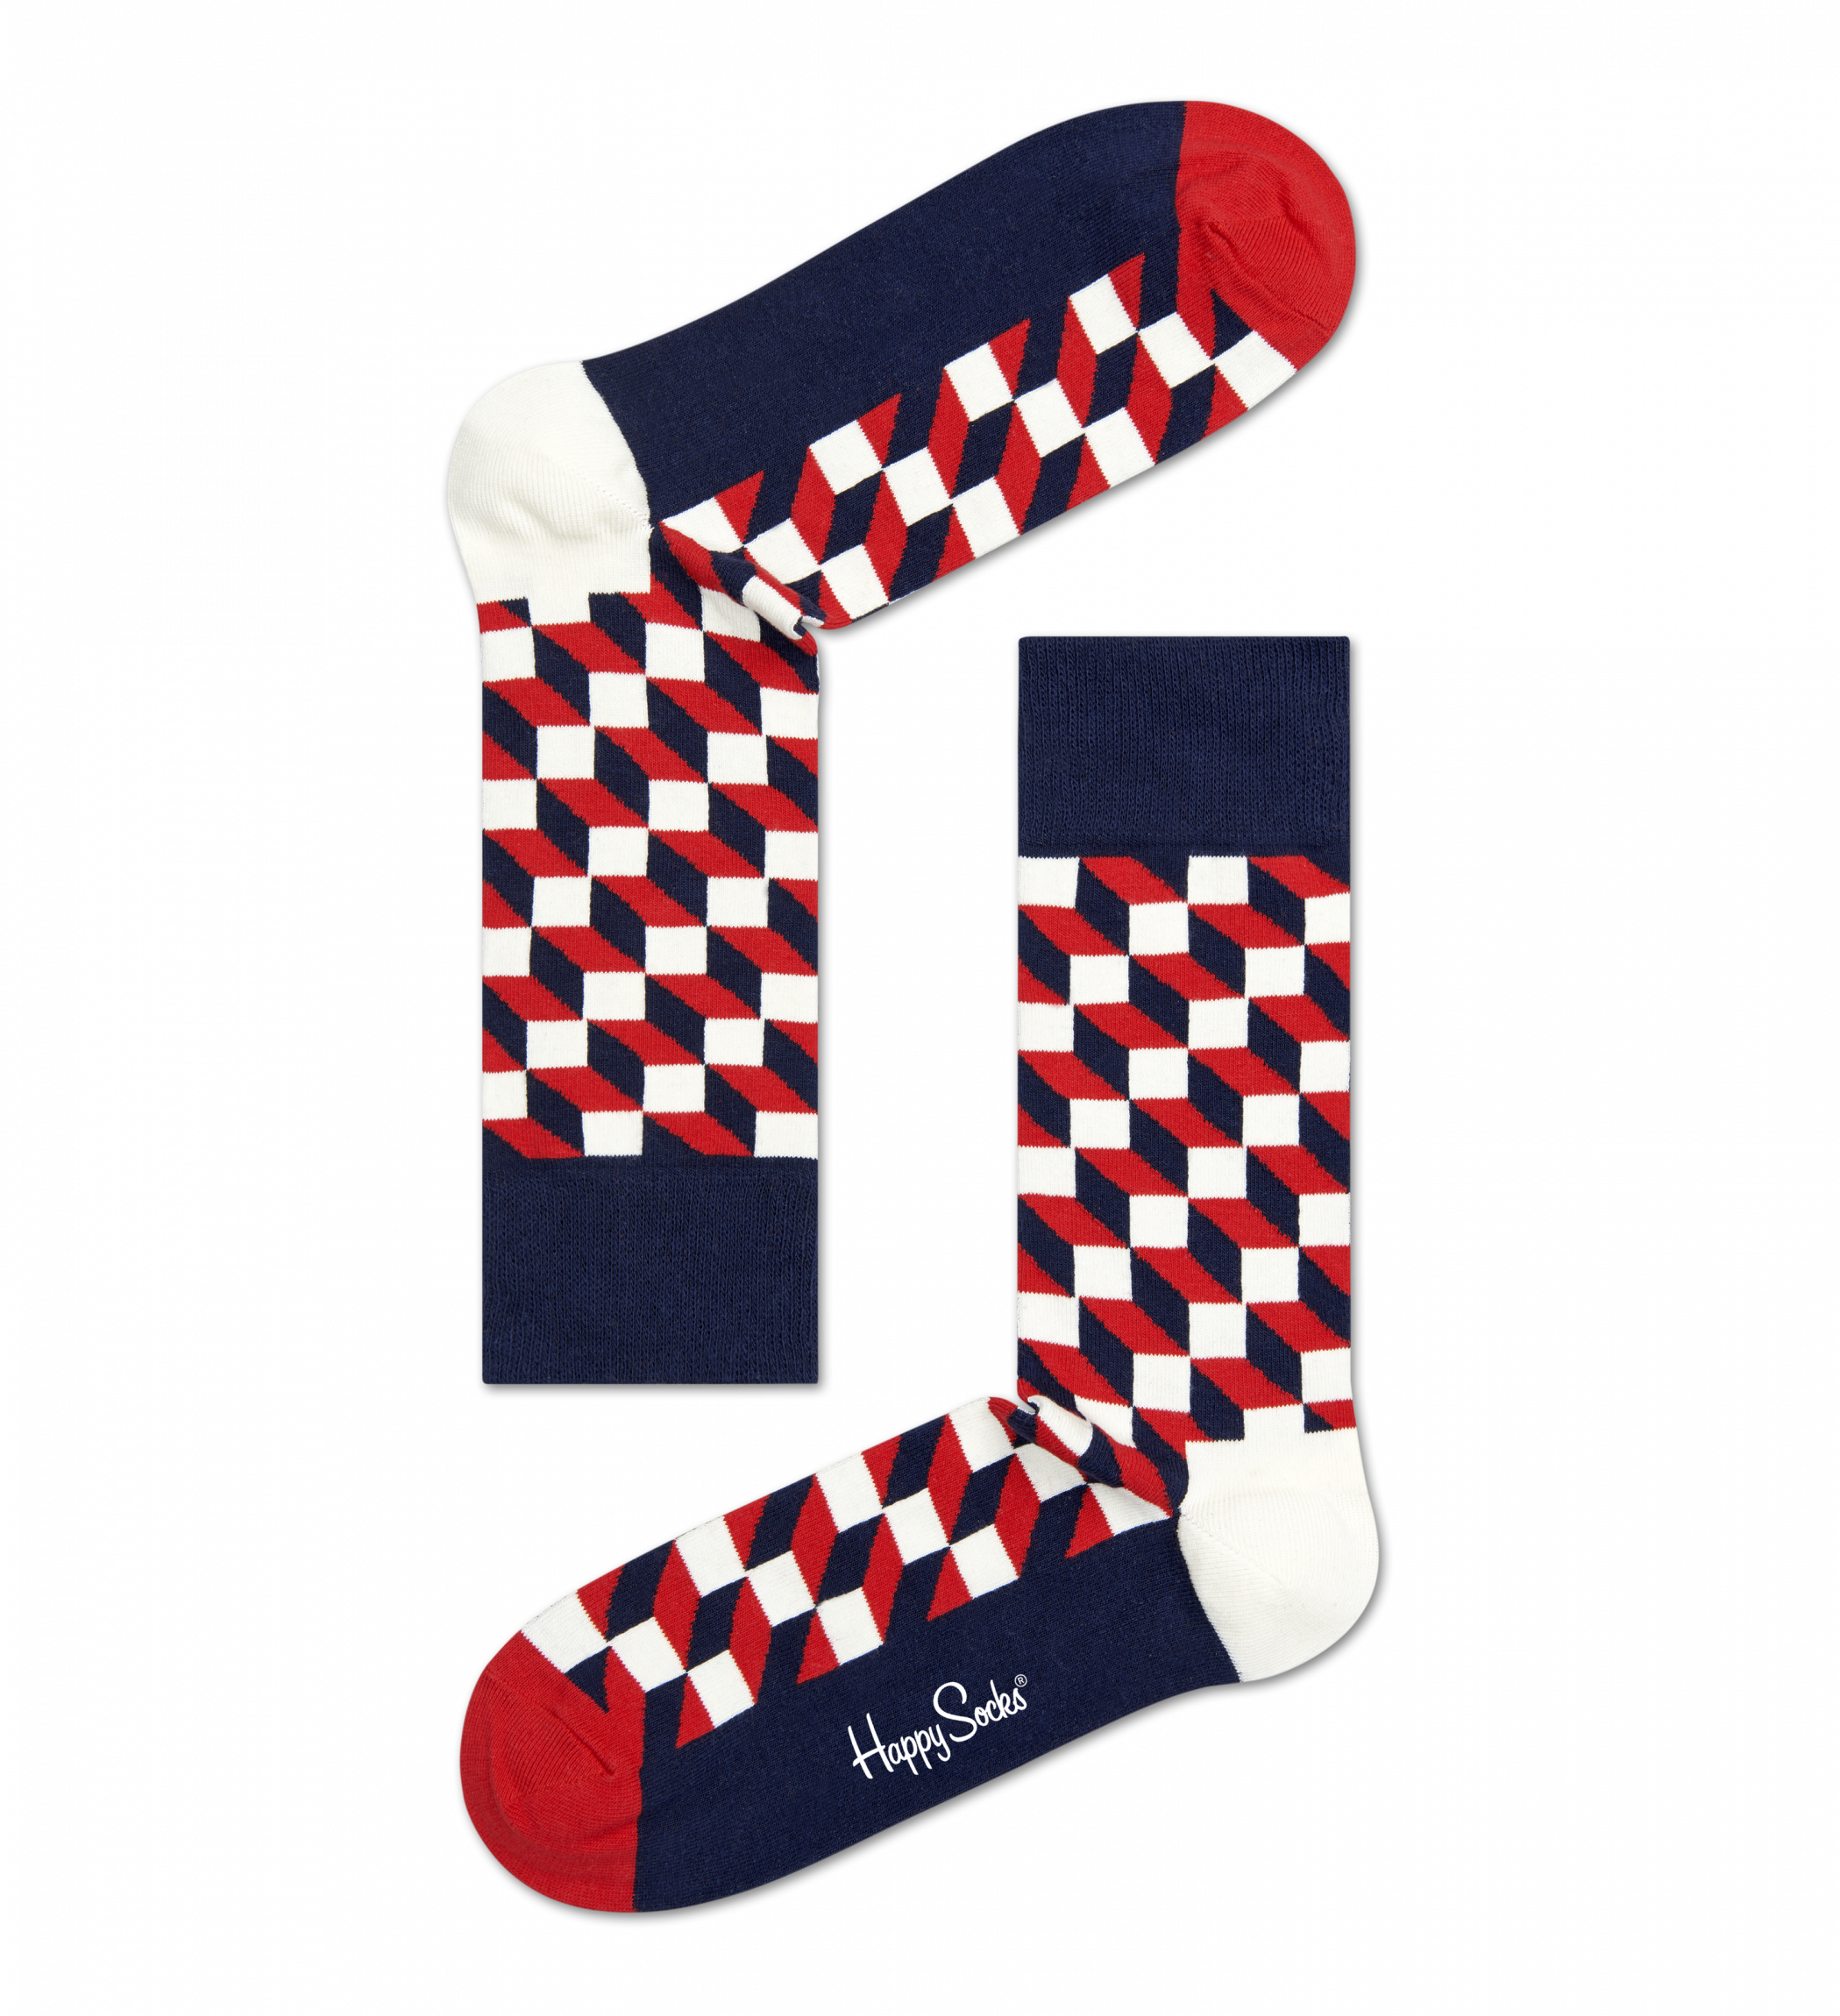 Barevné ponožky Happy Socks se vzorem Filled Optic